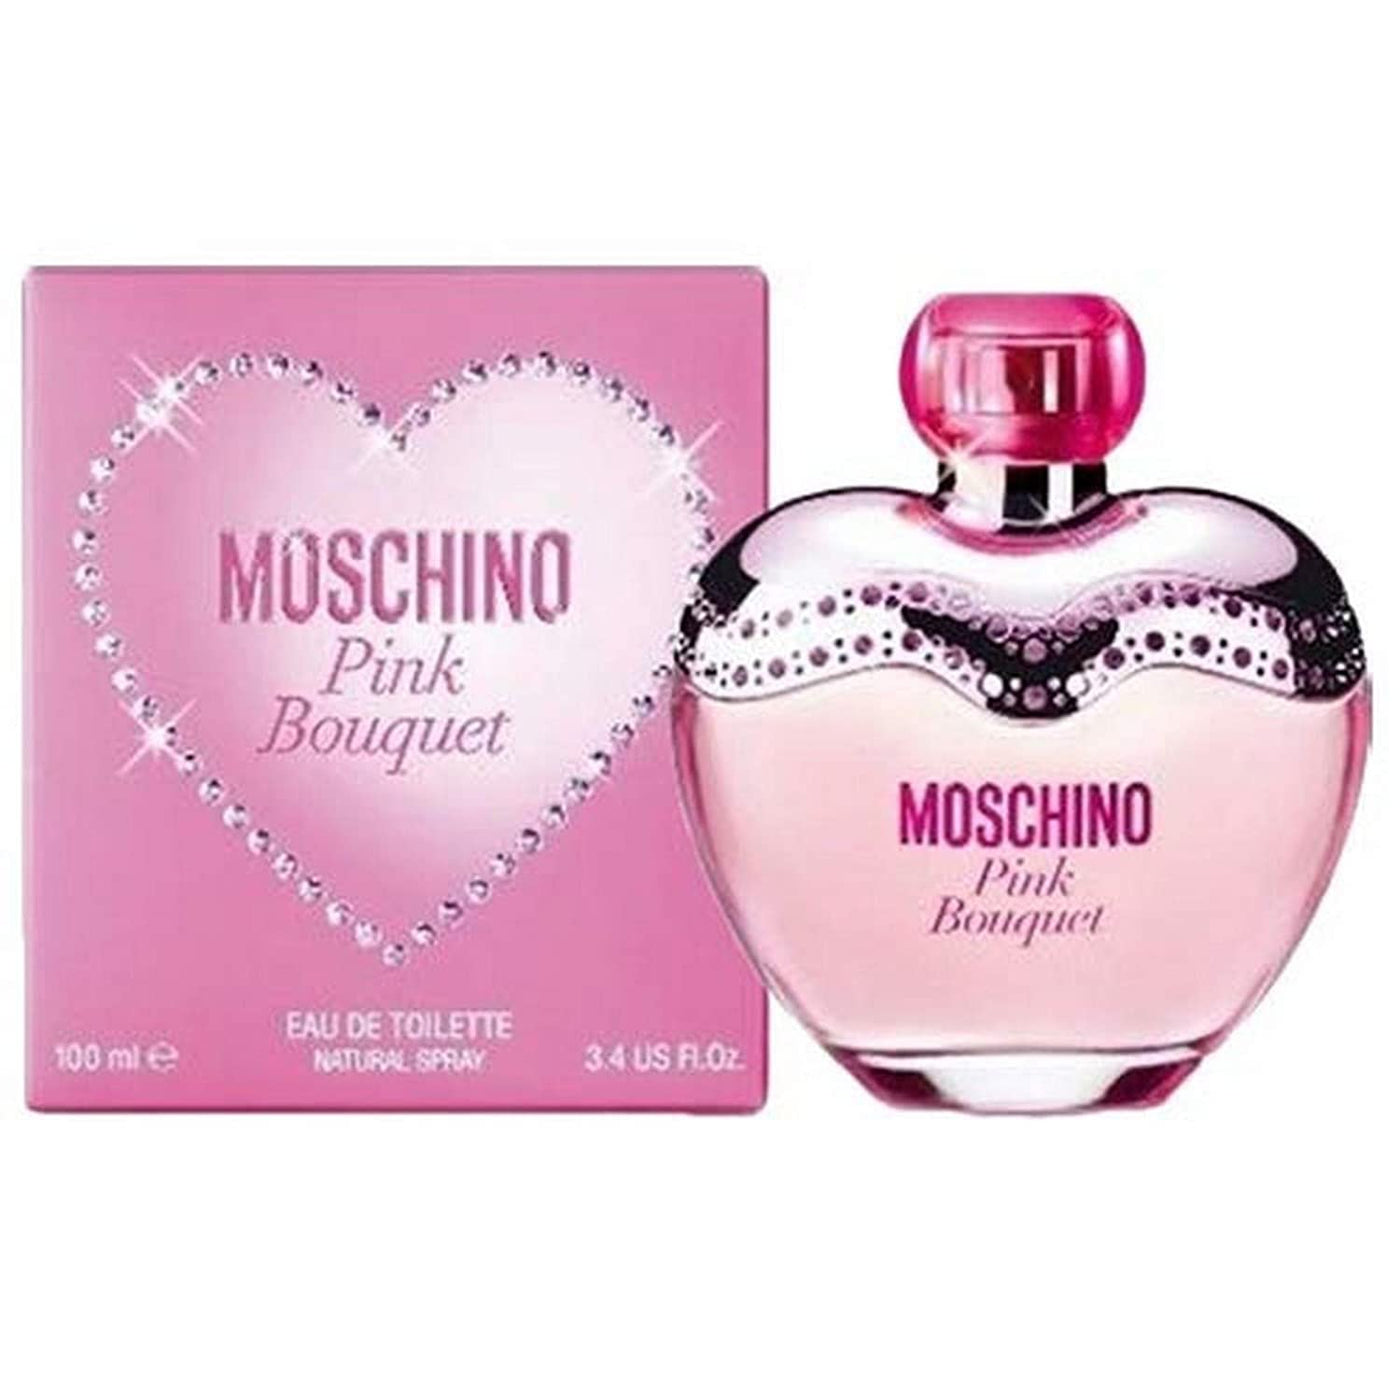 Moschino Pink Bouquet For Women Eau De Toilette 100Ml